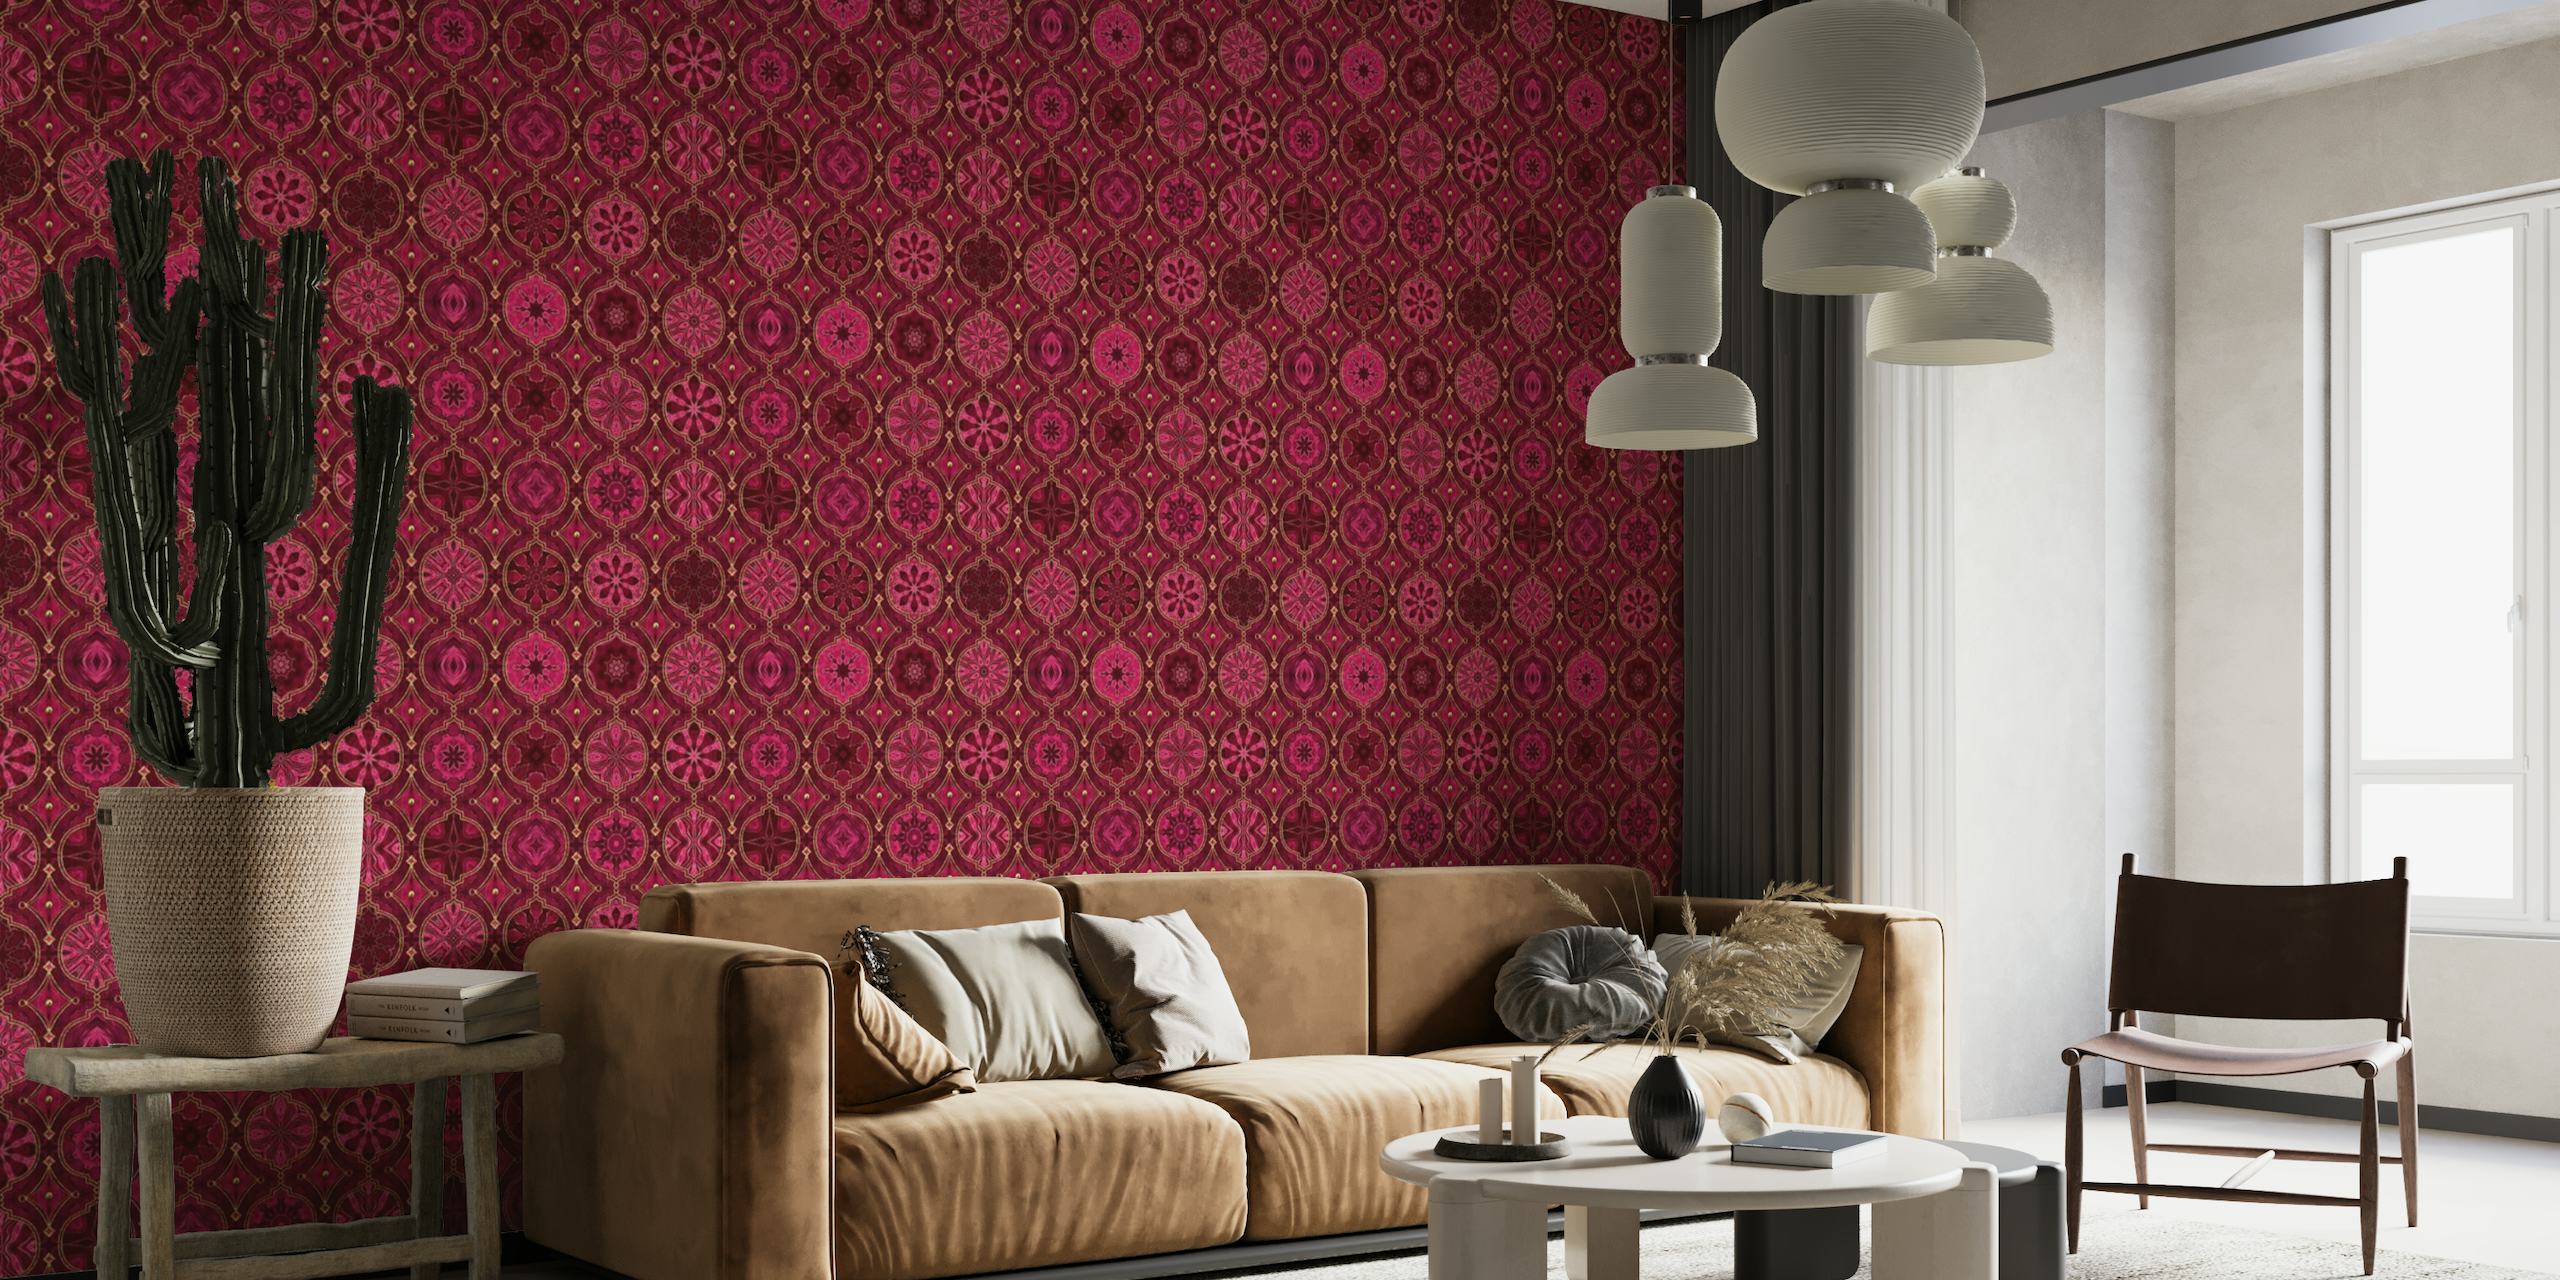 Treasures of Morocco Oriental Tile Design Burgundy Pink Gold tapete